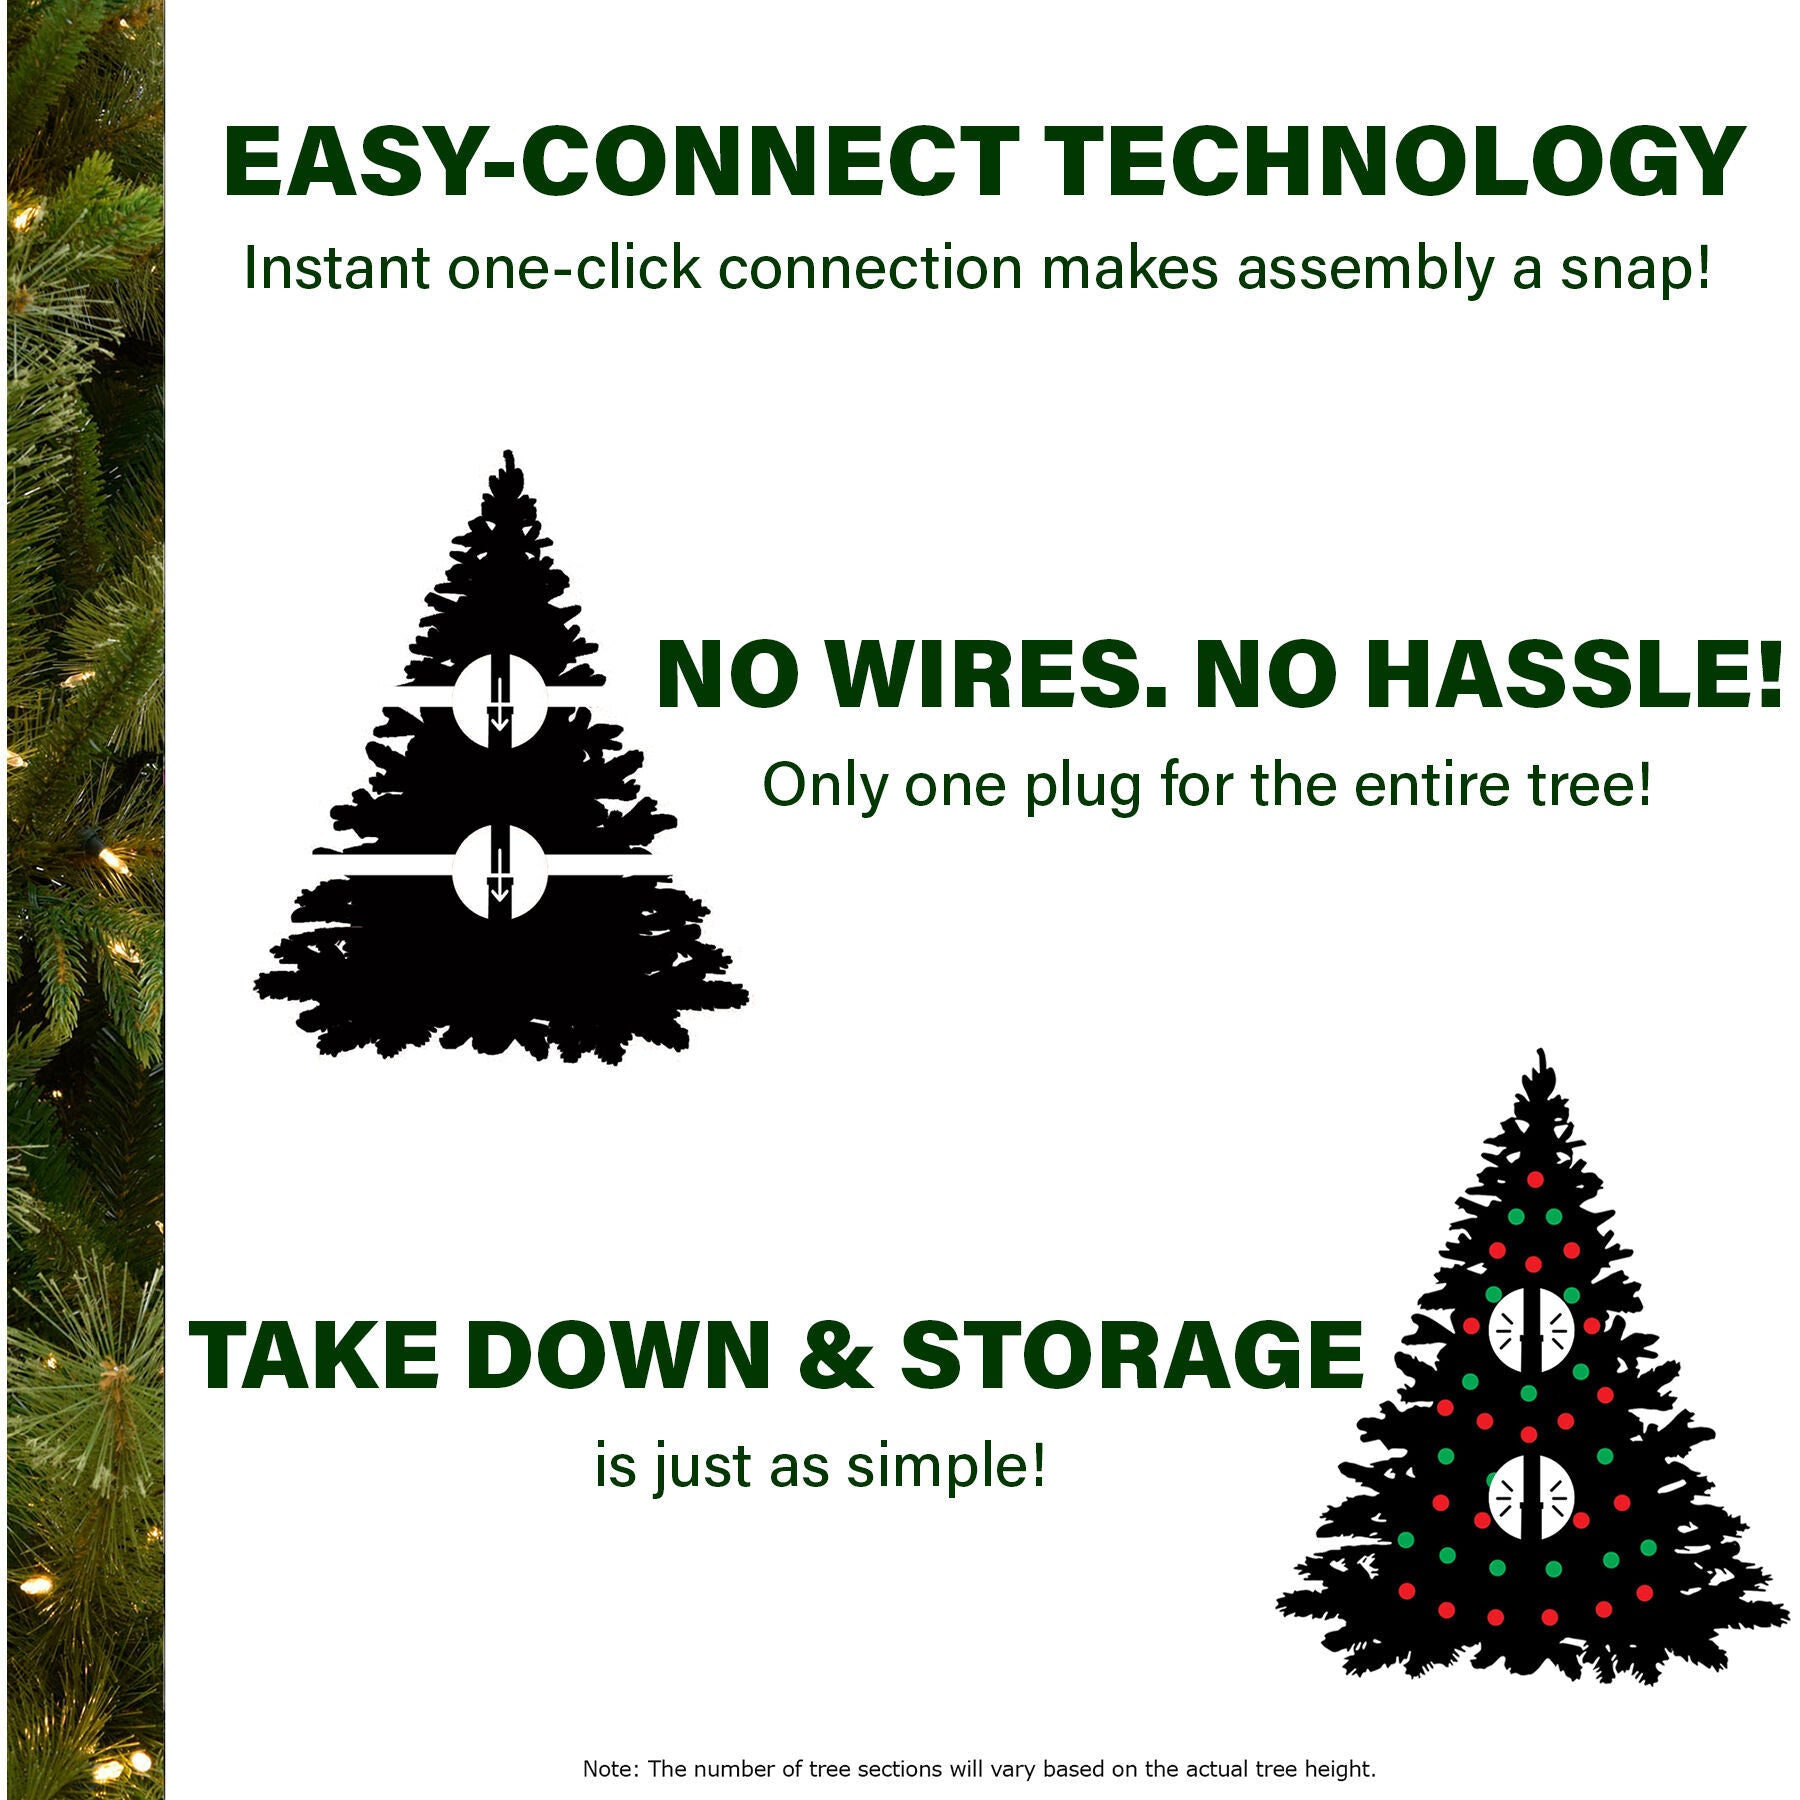 Fraser Hill Farm -  6.5 Ft. Buffalo Fir Slim Artificial Christmas Tree with LED String Lighting